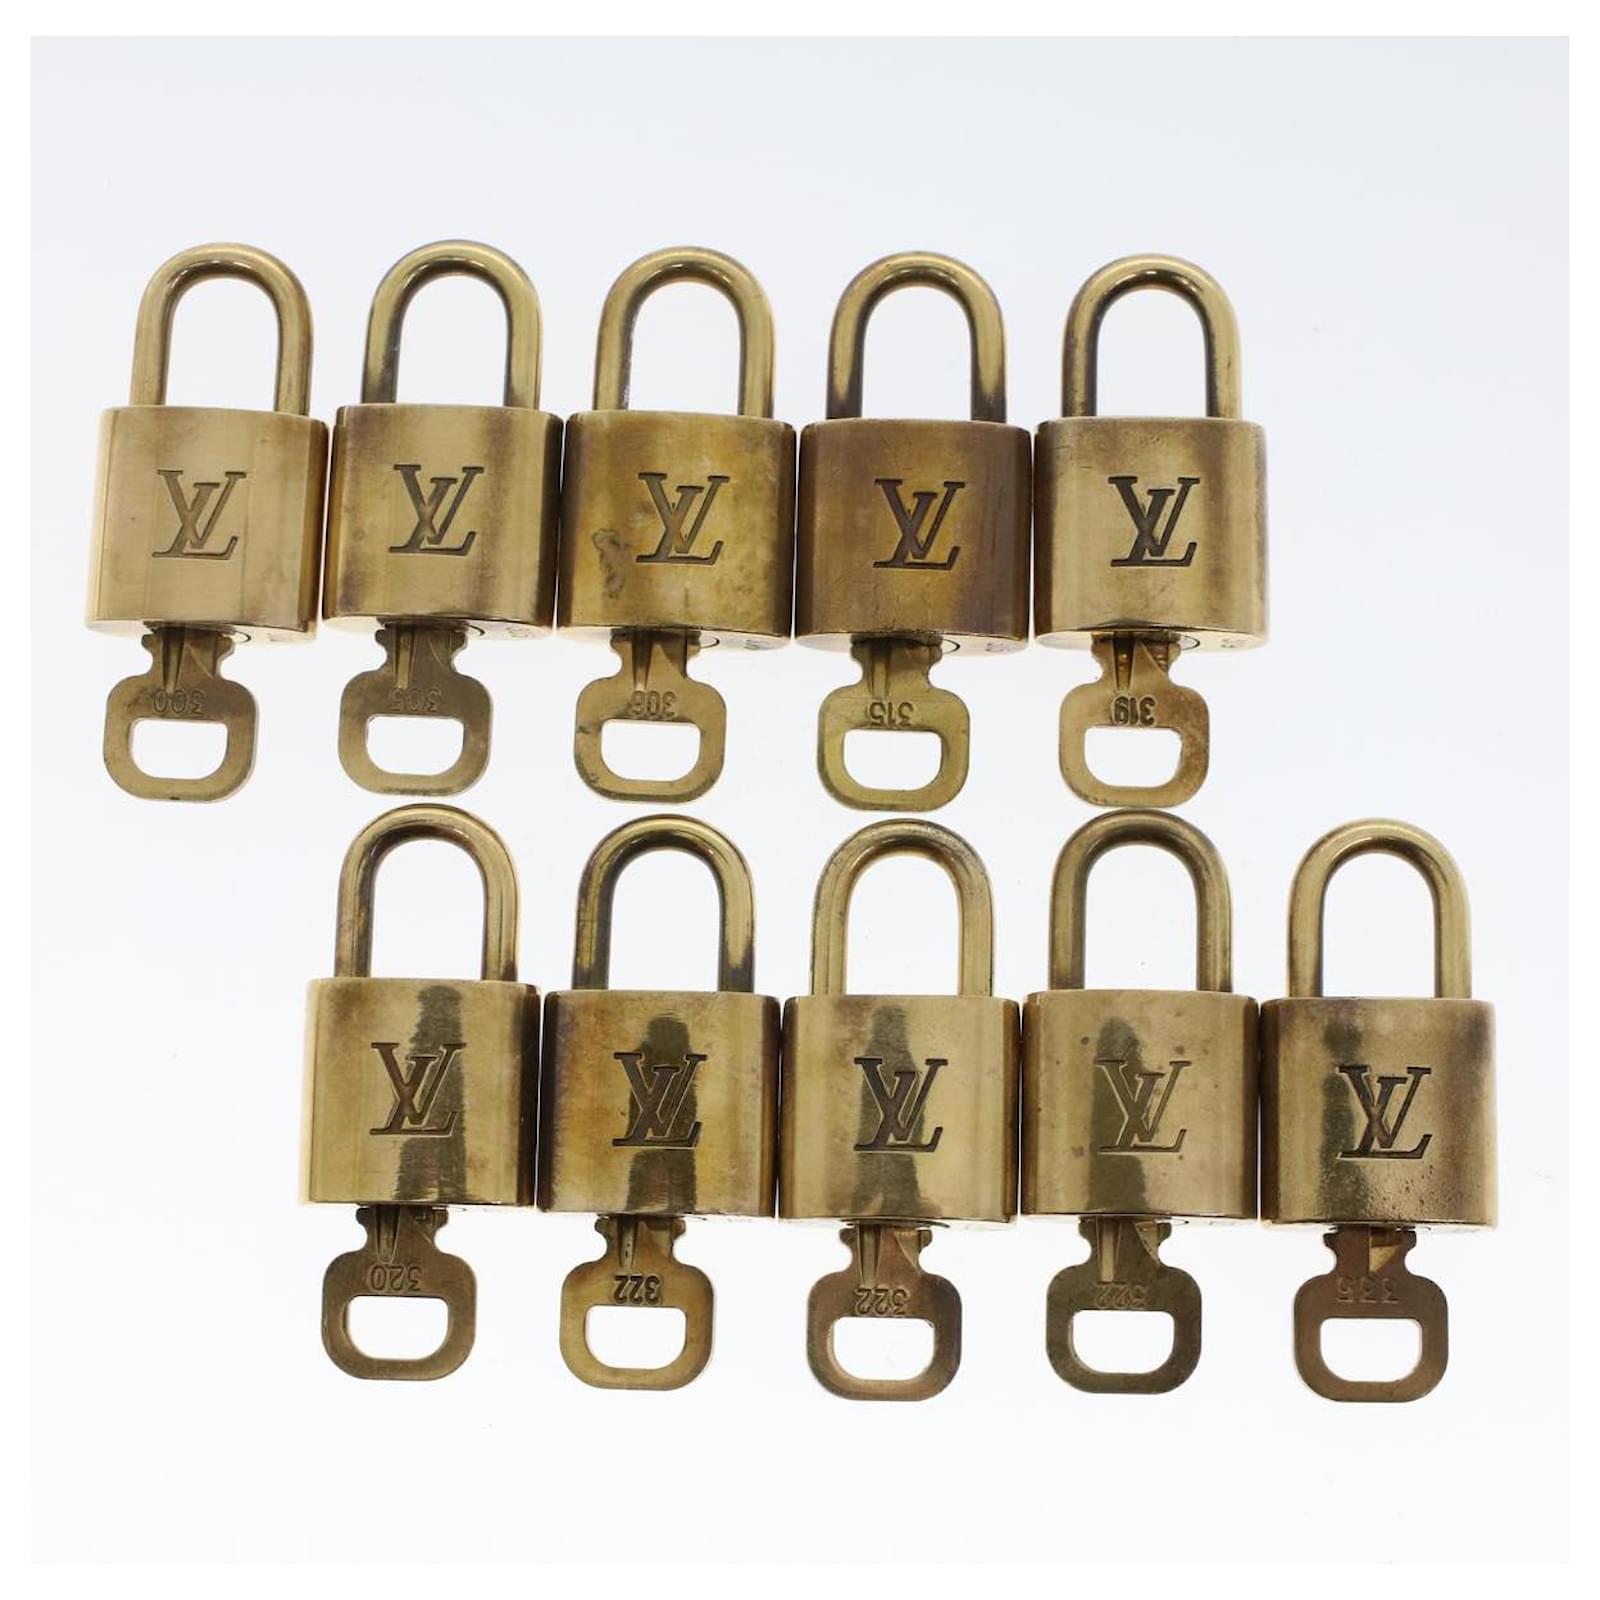 Louis Vuitton Lock and 2 Keys Set